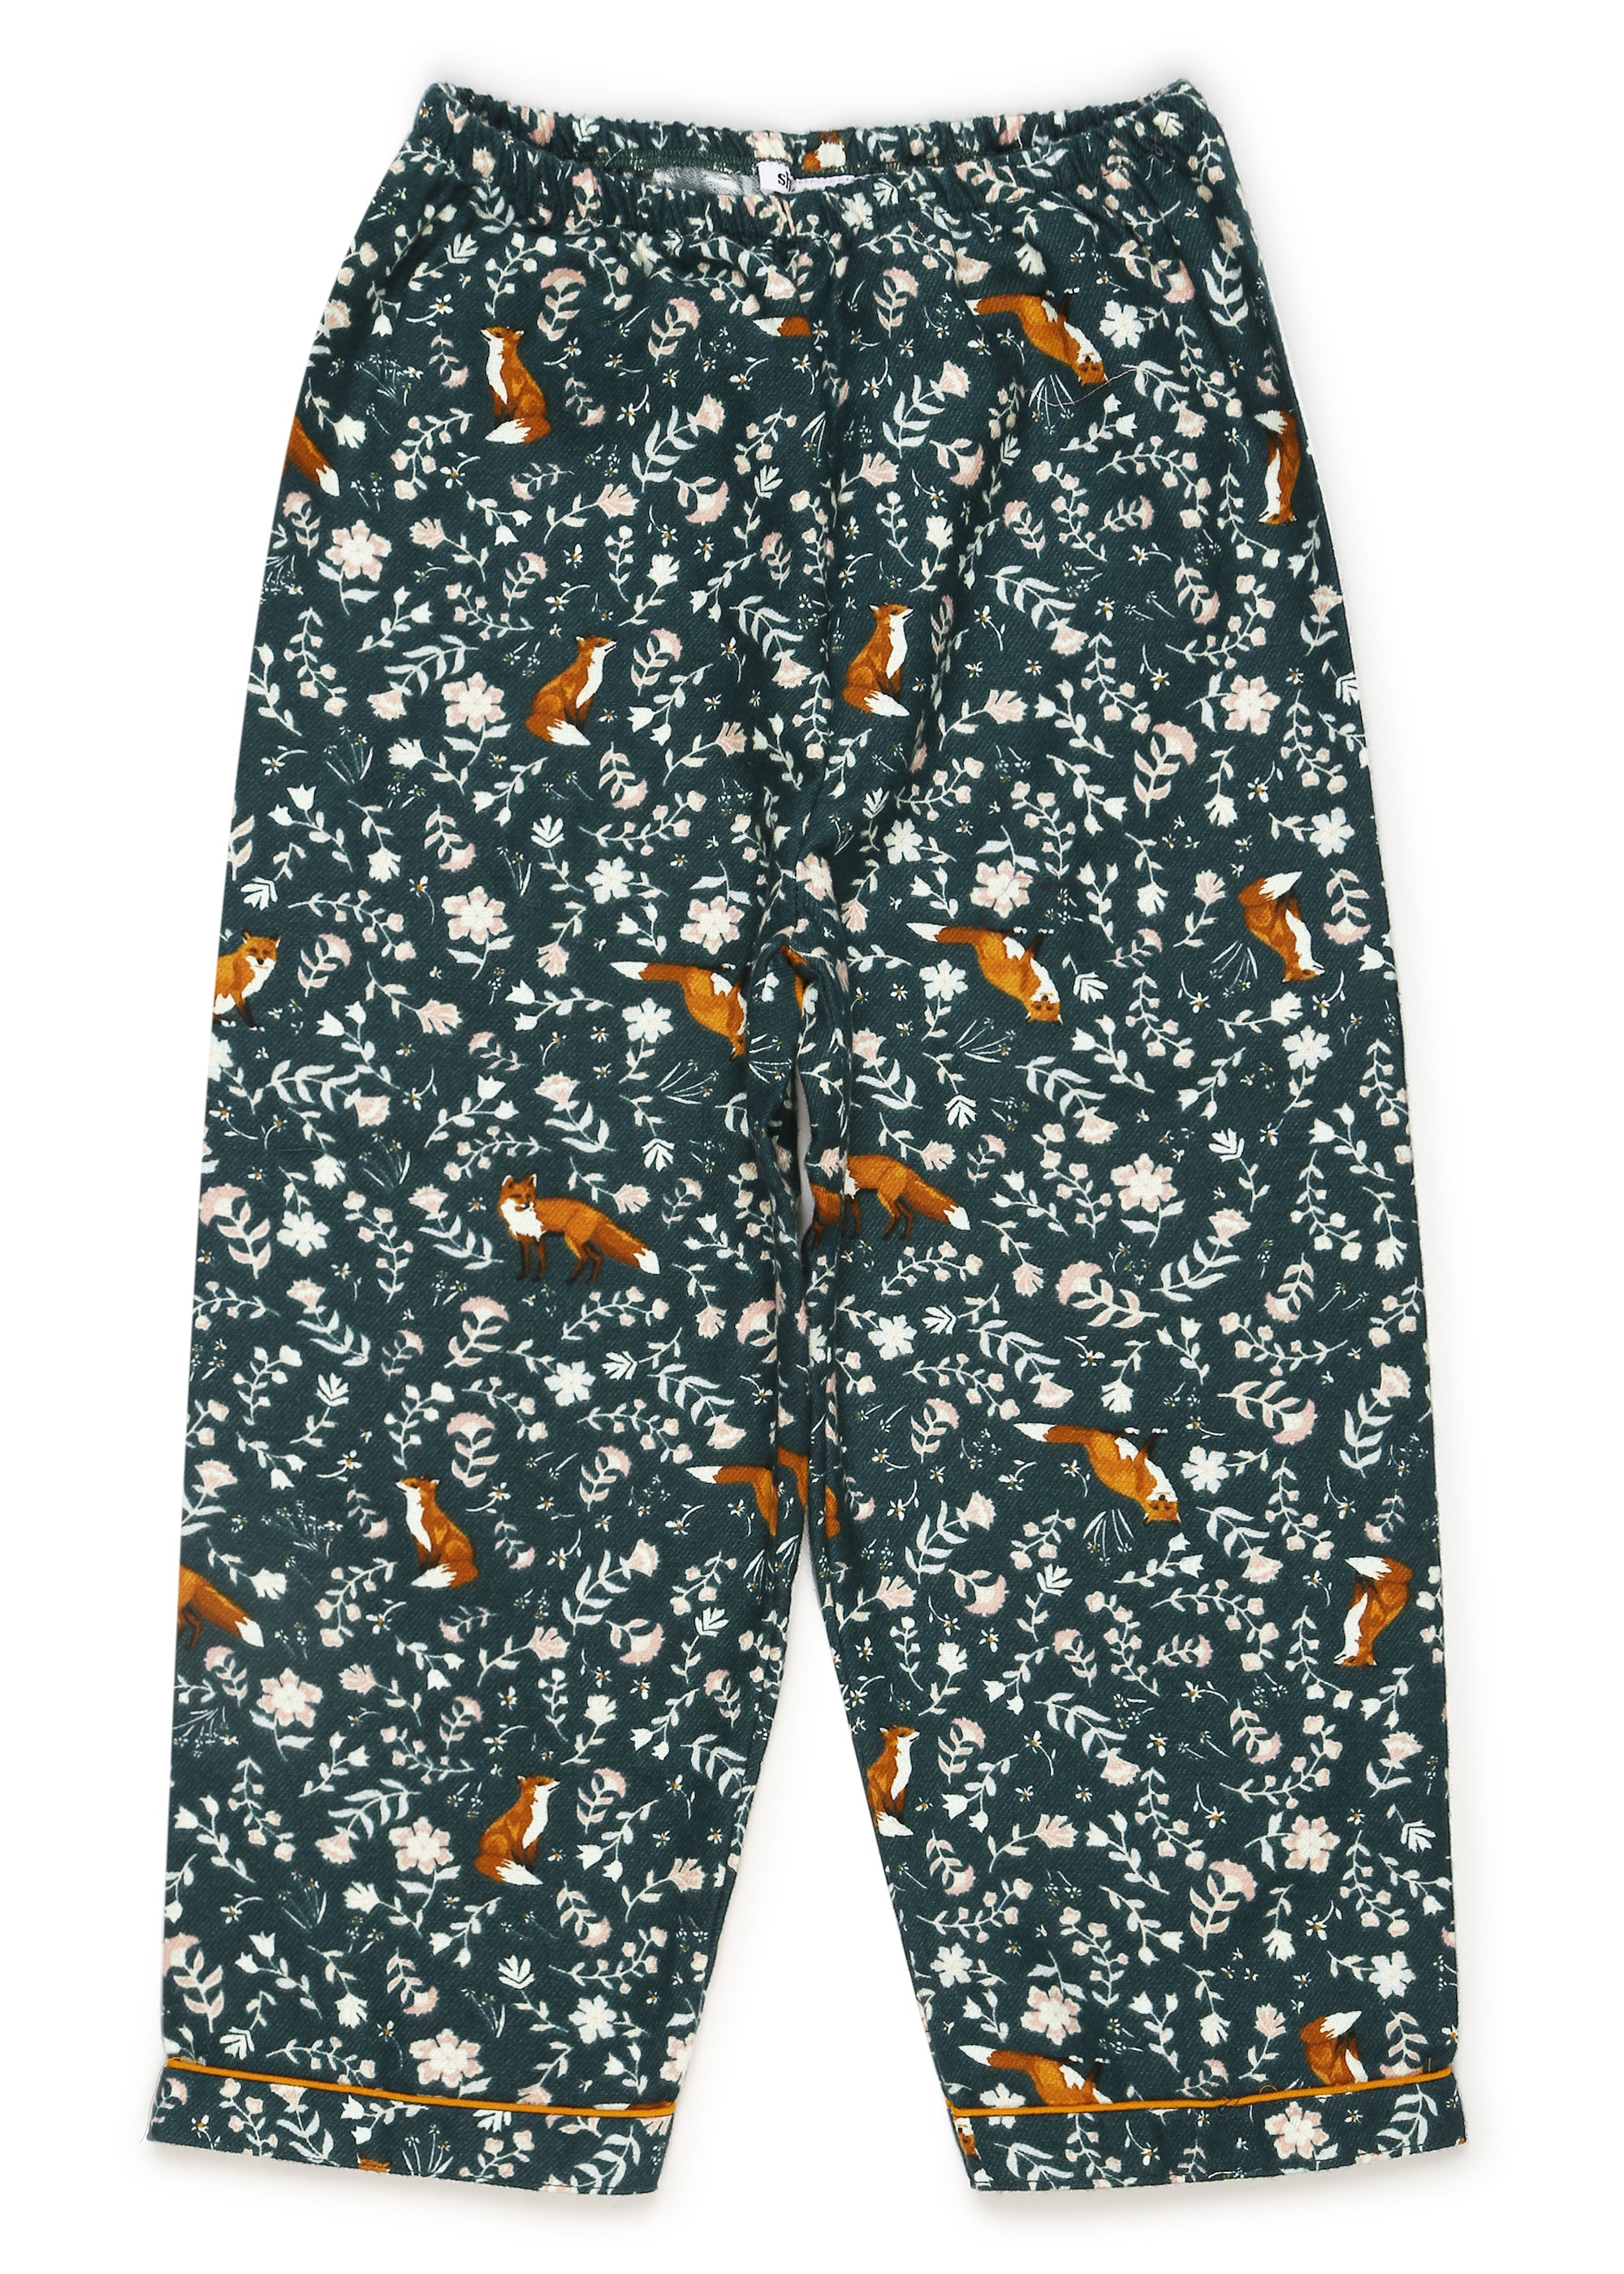 Fox Print Cotton Flannel Long Sleeve Kid's Night Suit - Shopbloom